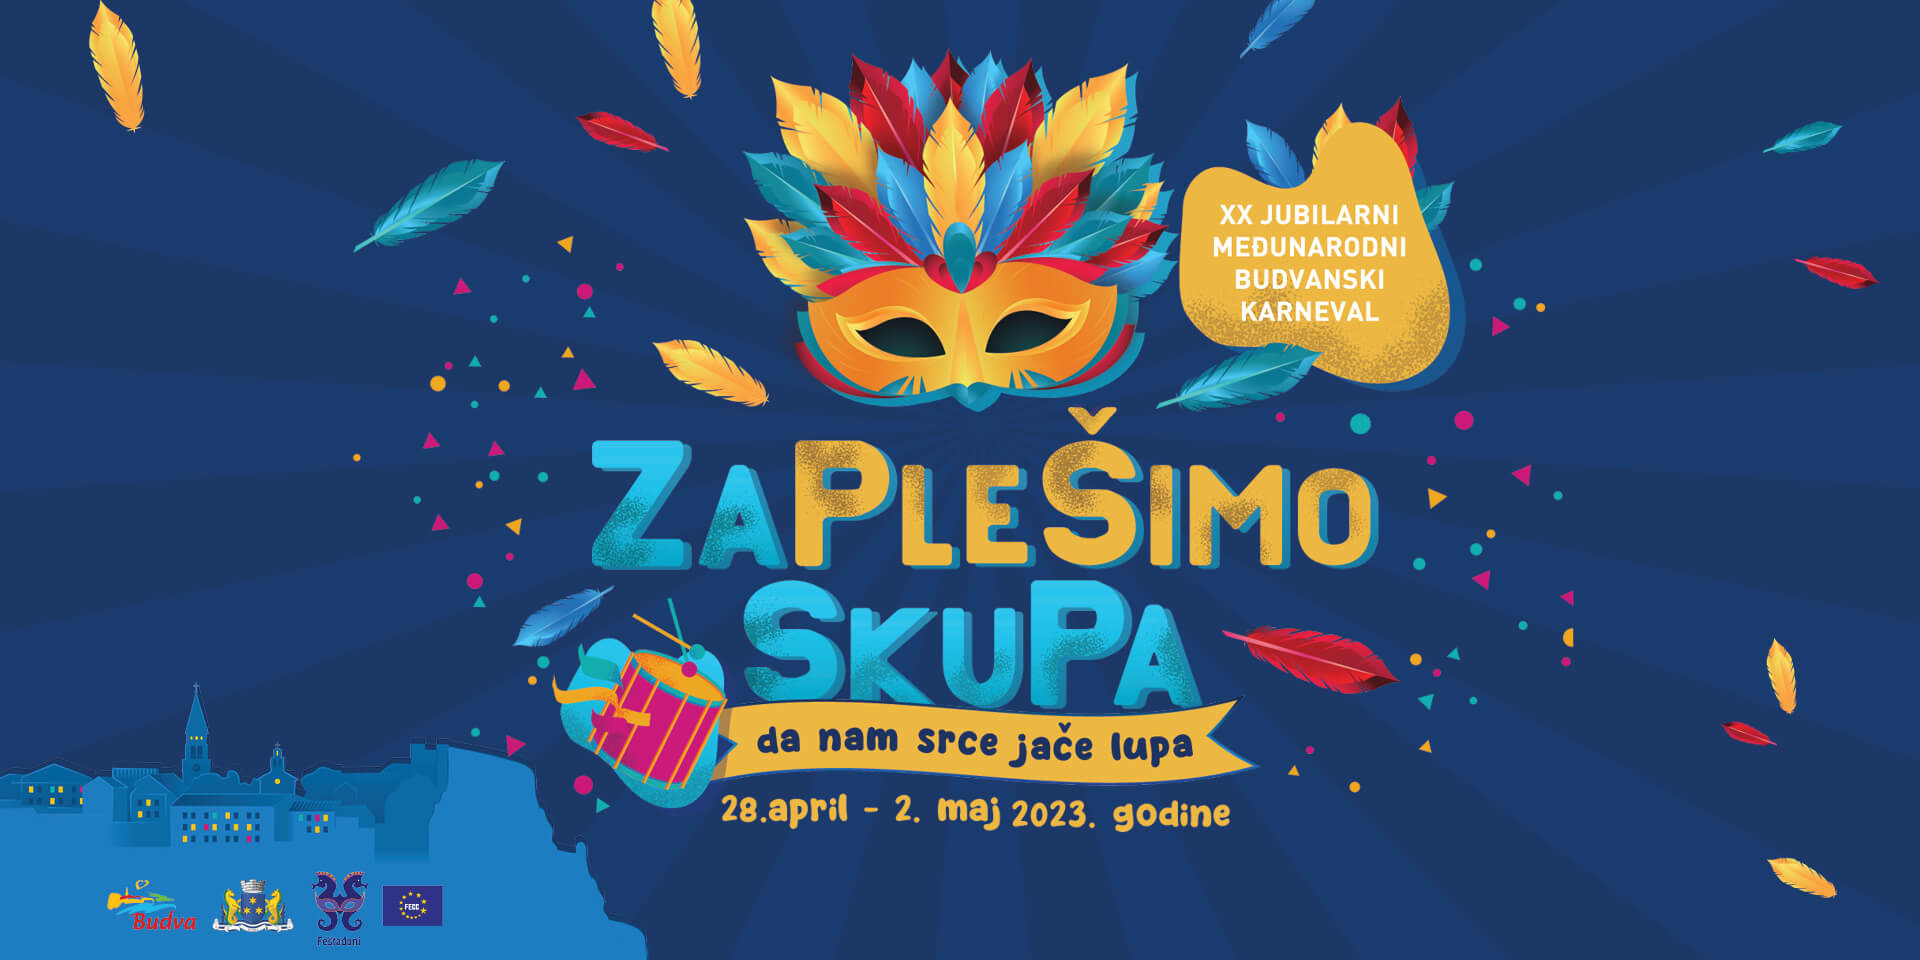 20th anniversary of International Carnival in Budva